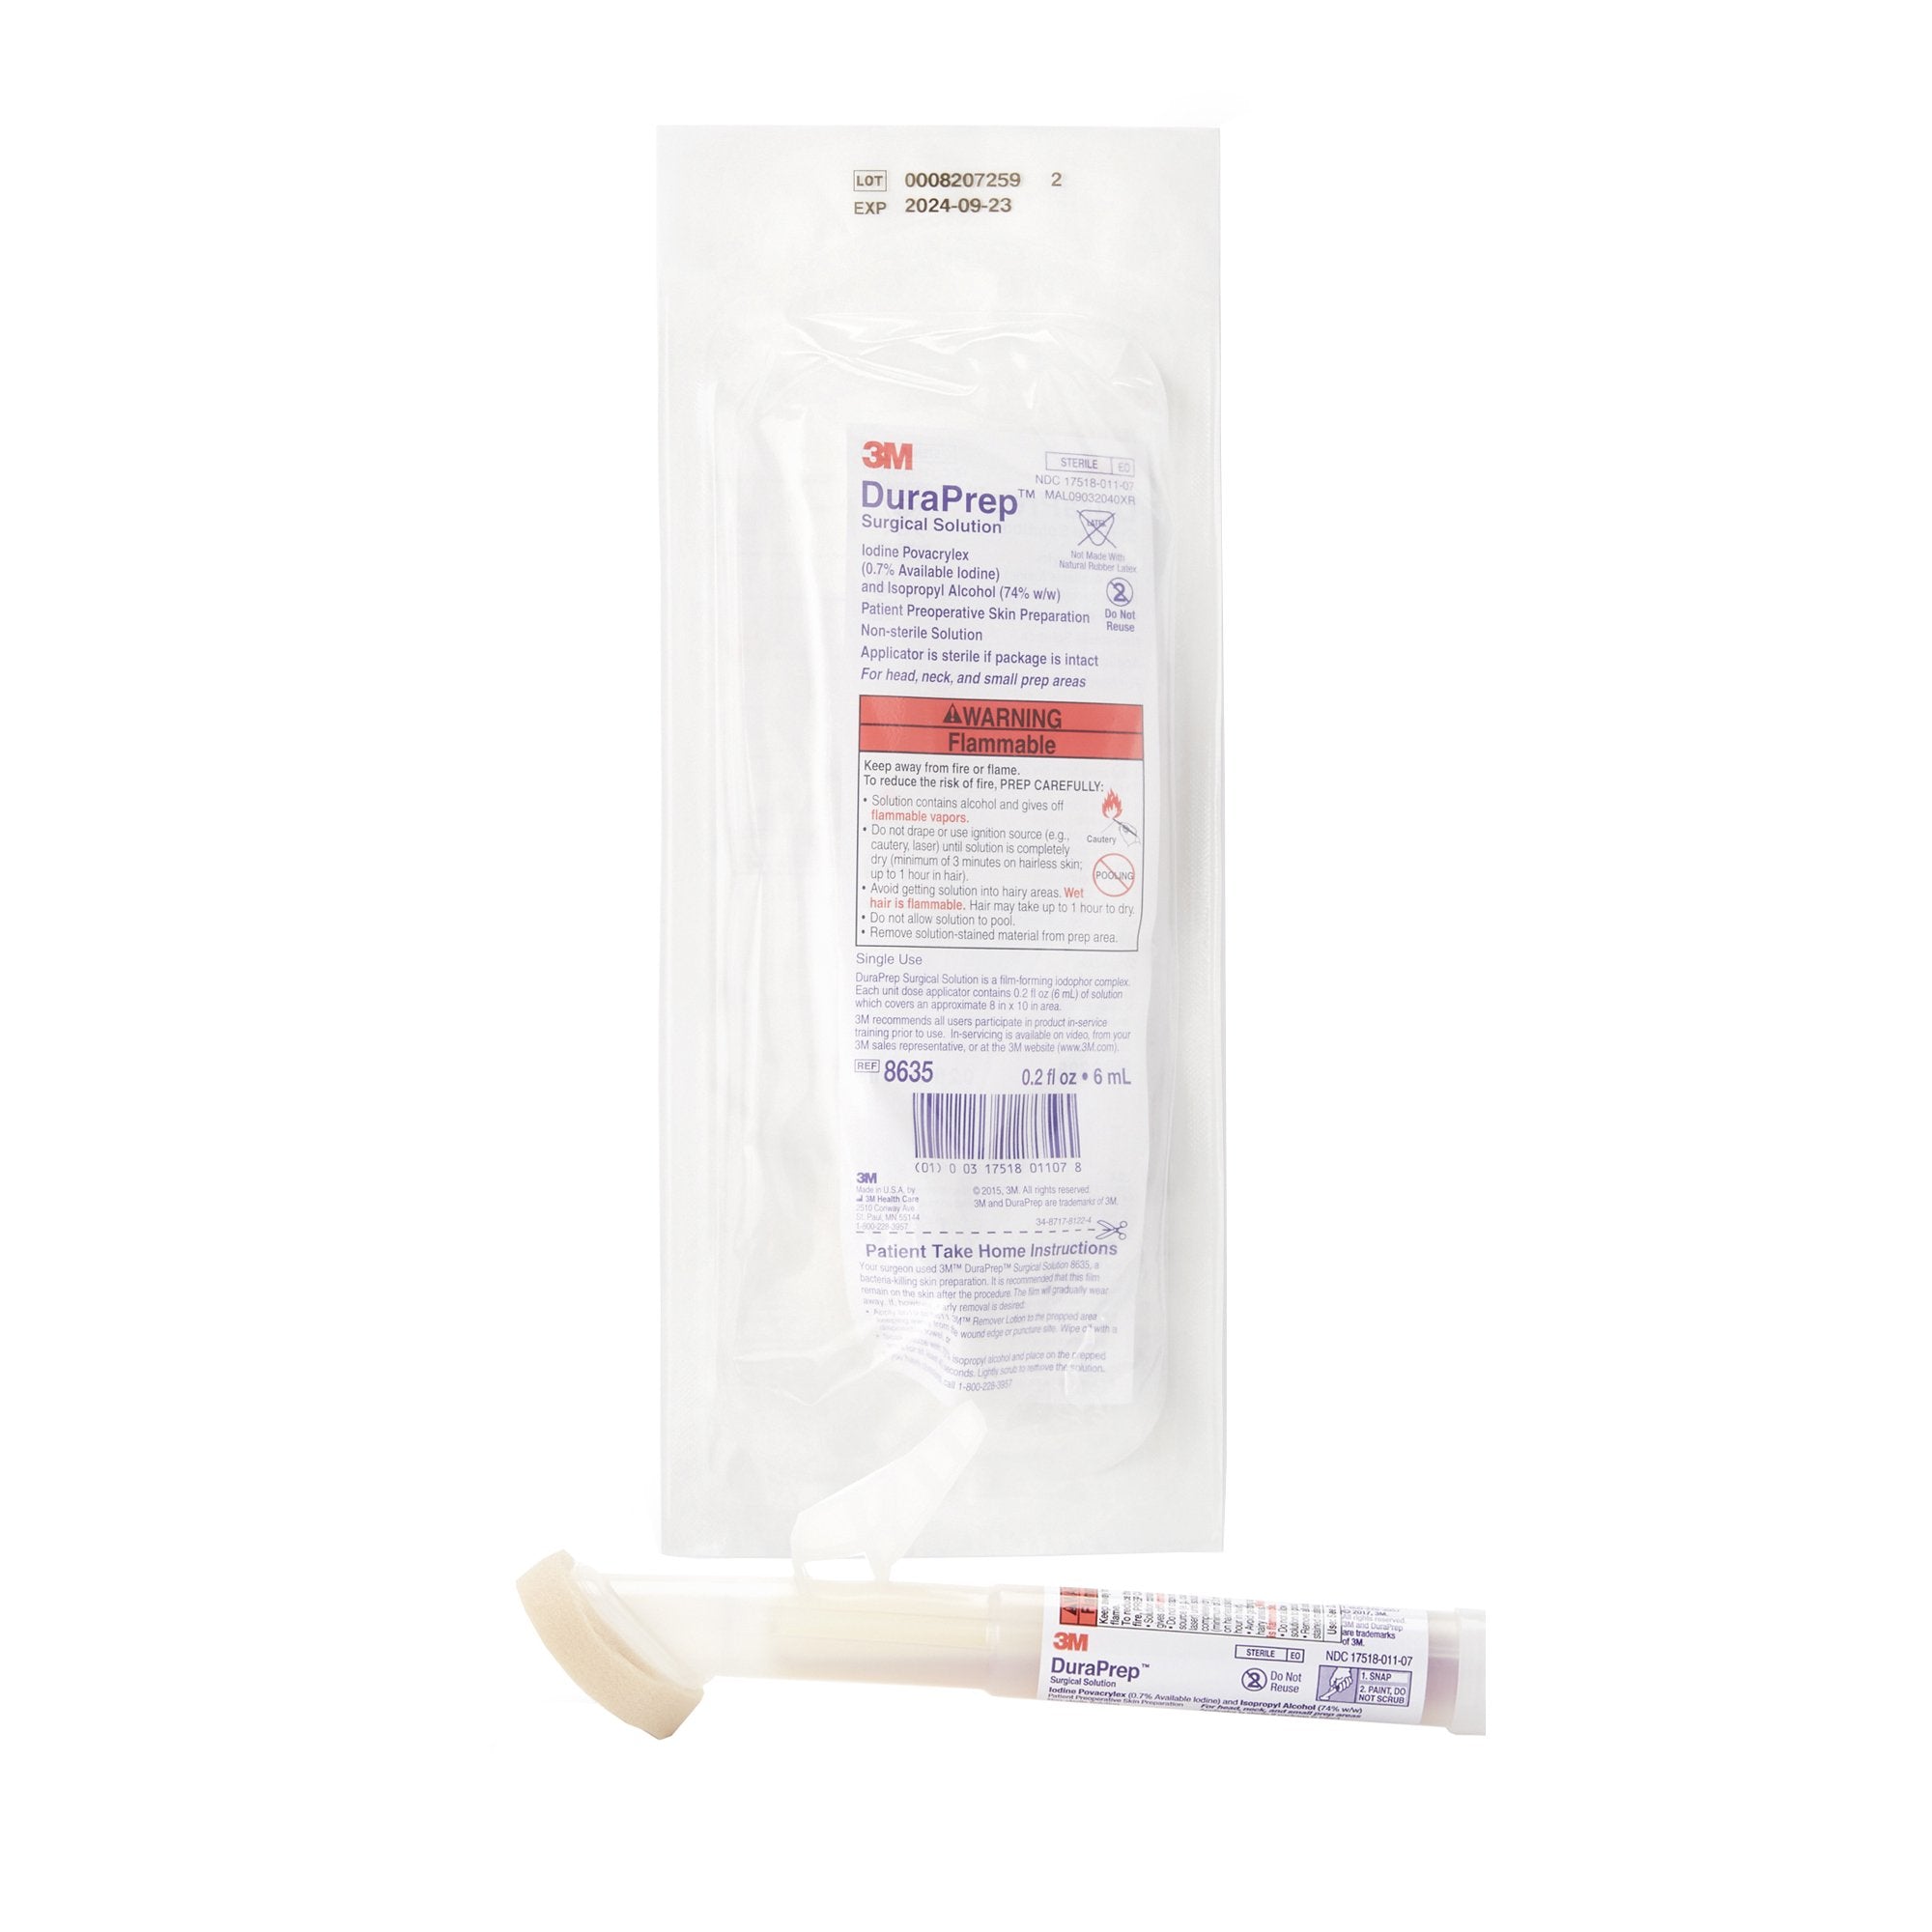 Skin Prep Solution 3M DuraPrep 6 mL Foam Applicator 0.7% / 74% Strength Iodine Povacrylex / Isopropyl Alcohol NonSterile